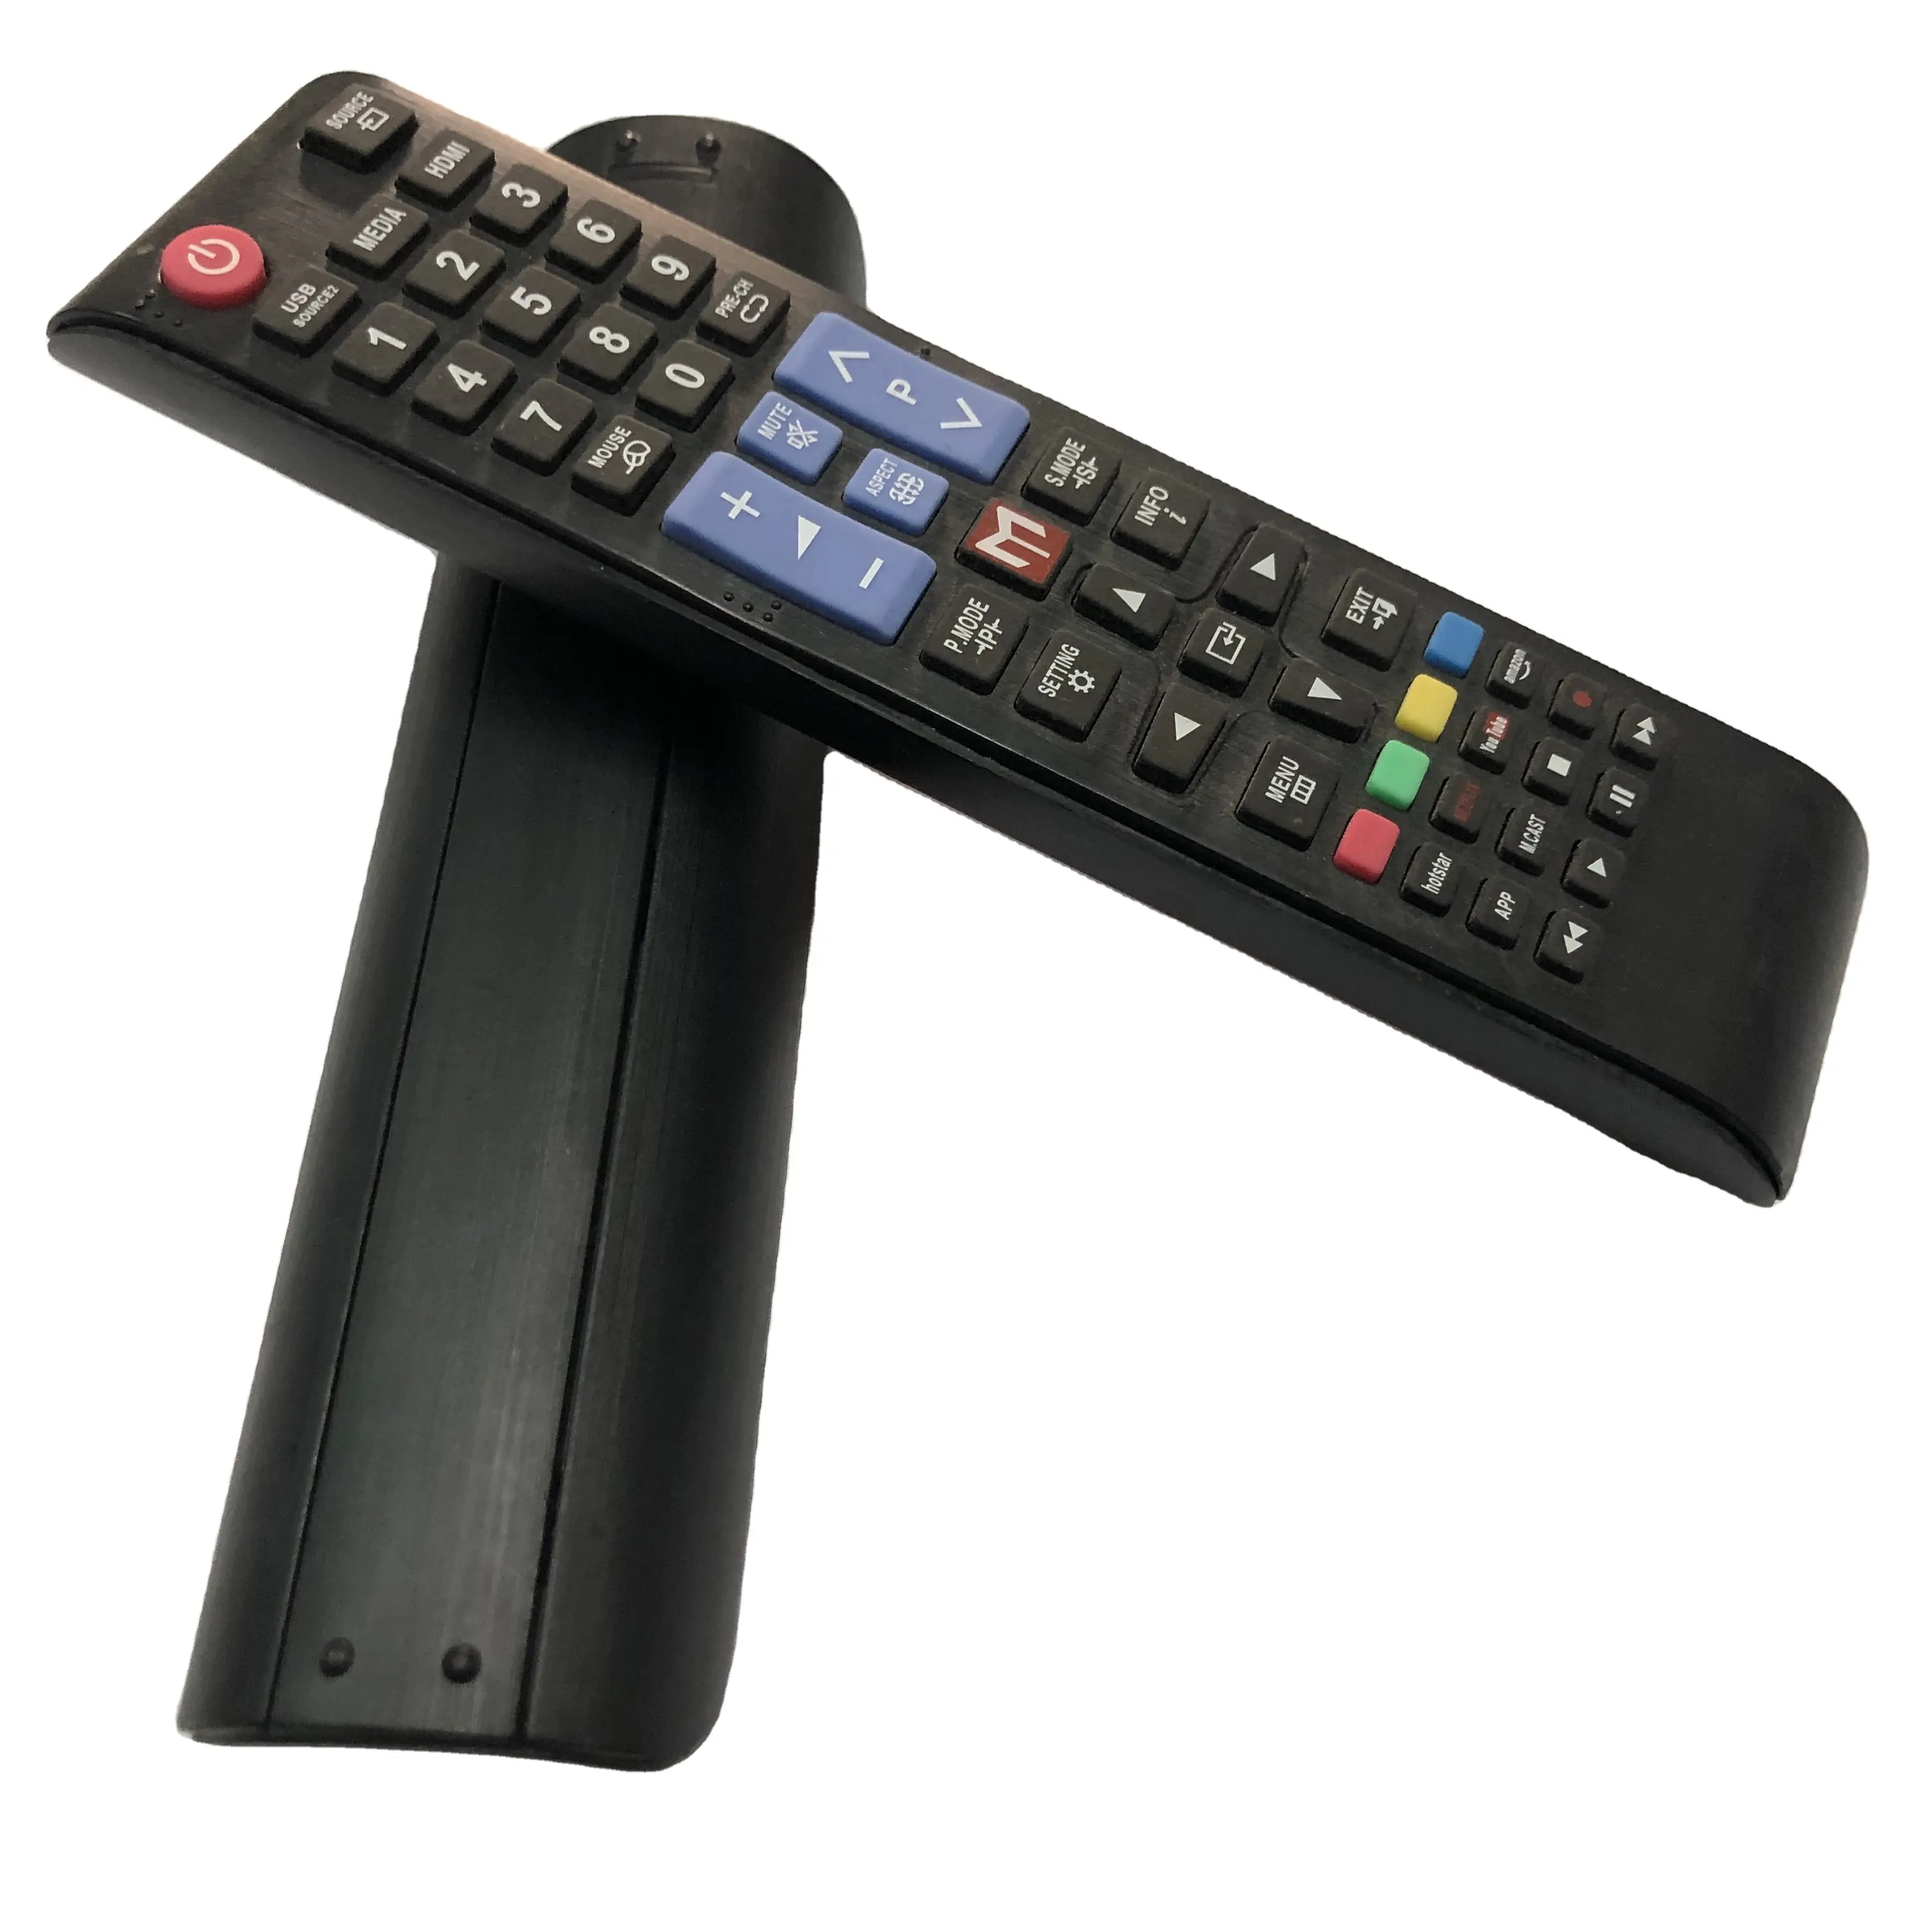 SCREEN SHOT Universal LCD TV remote control